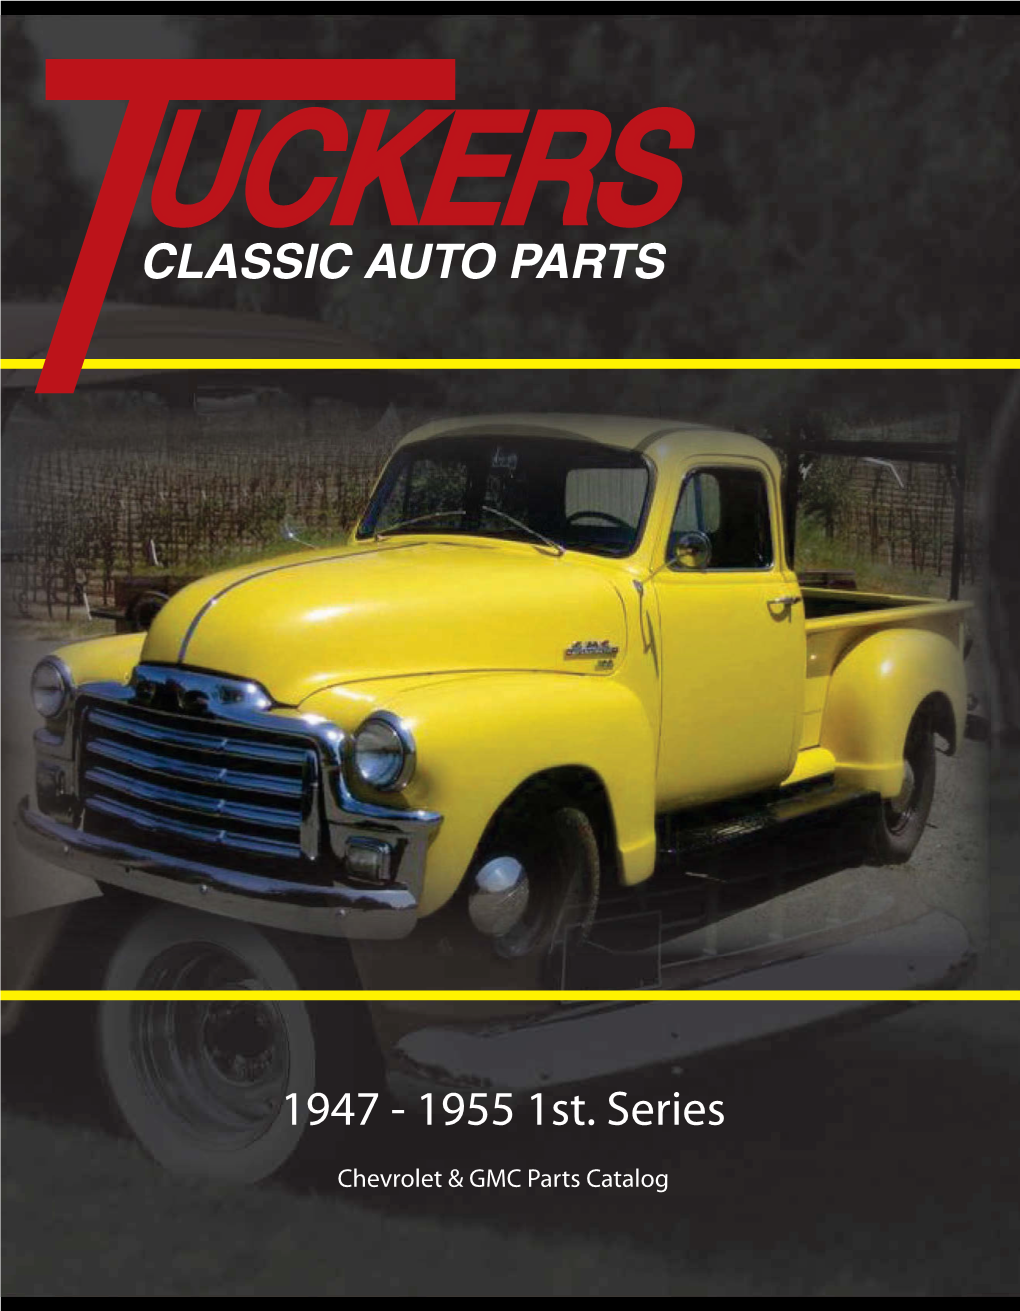 Tuckers Classic Auto Parts 1947-1955 1St. Series Chevrolet & GMC Truck Parts Catalog Link